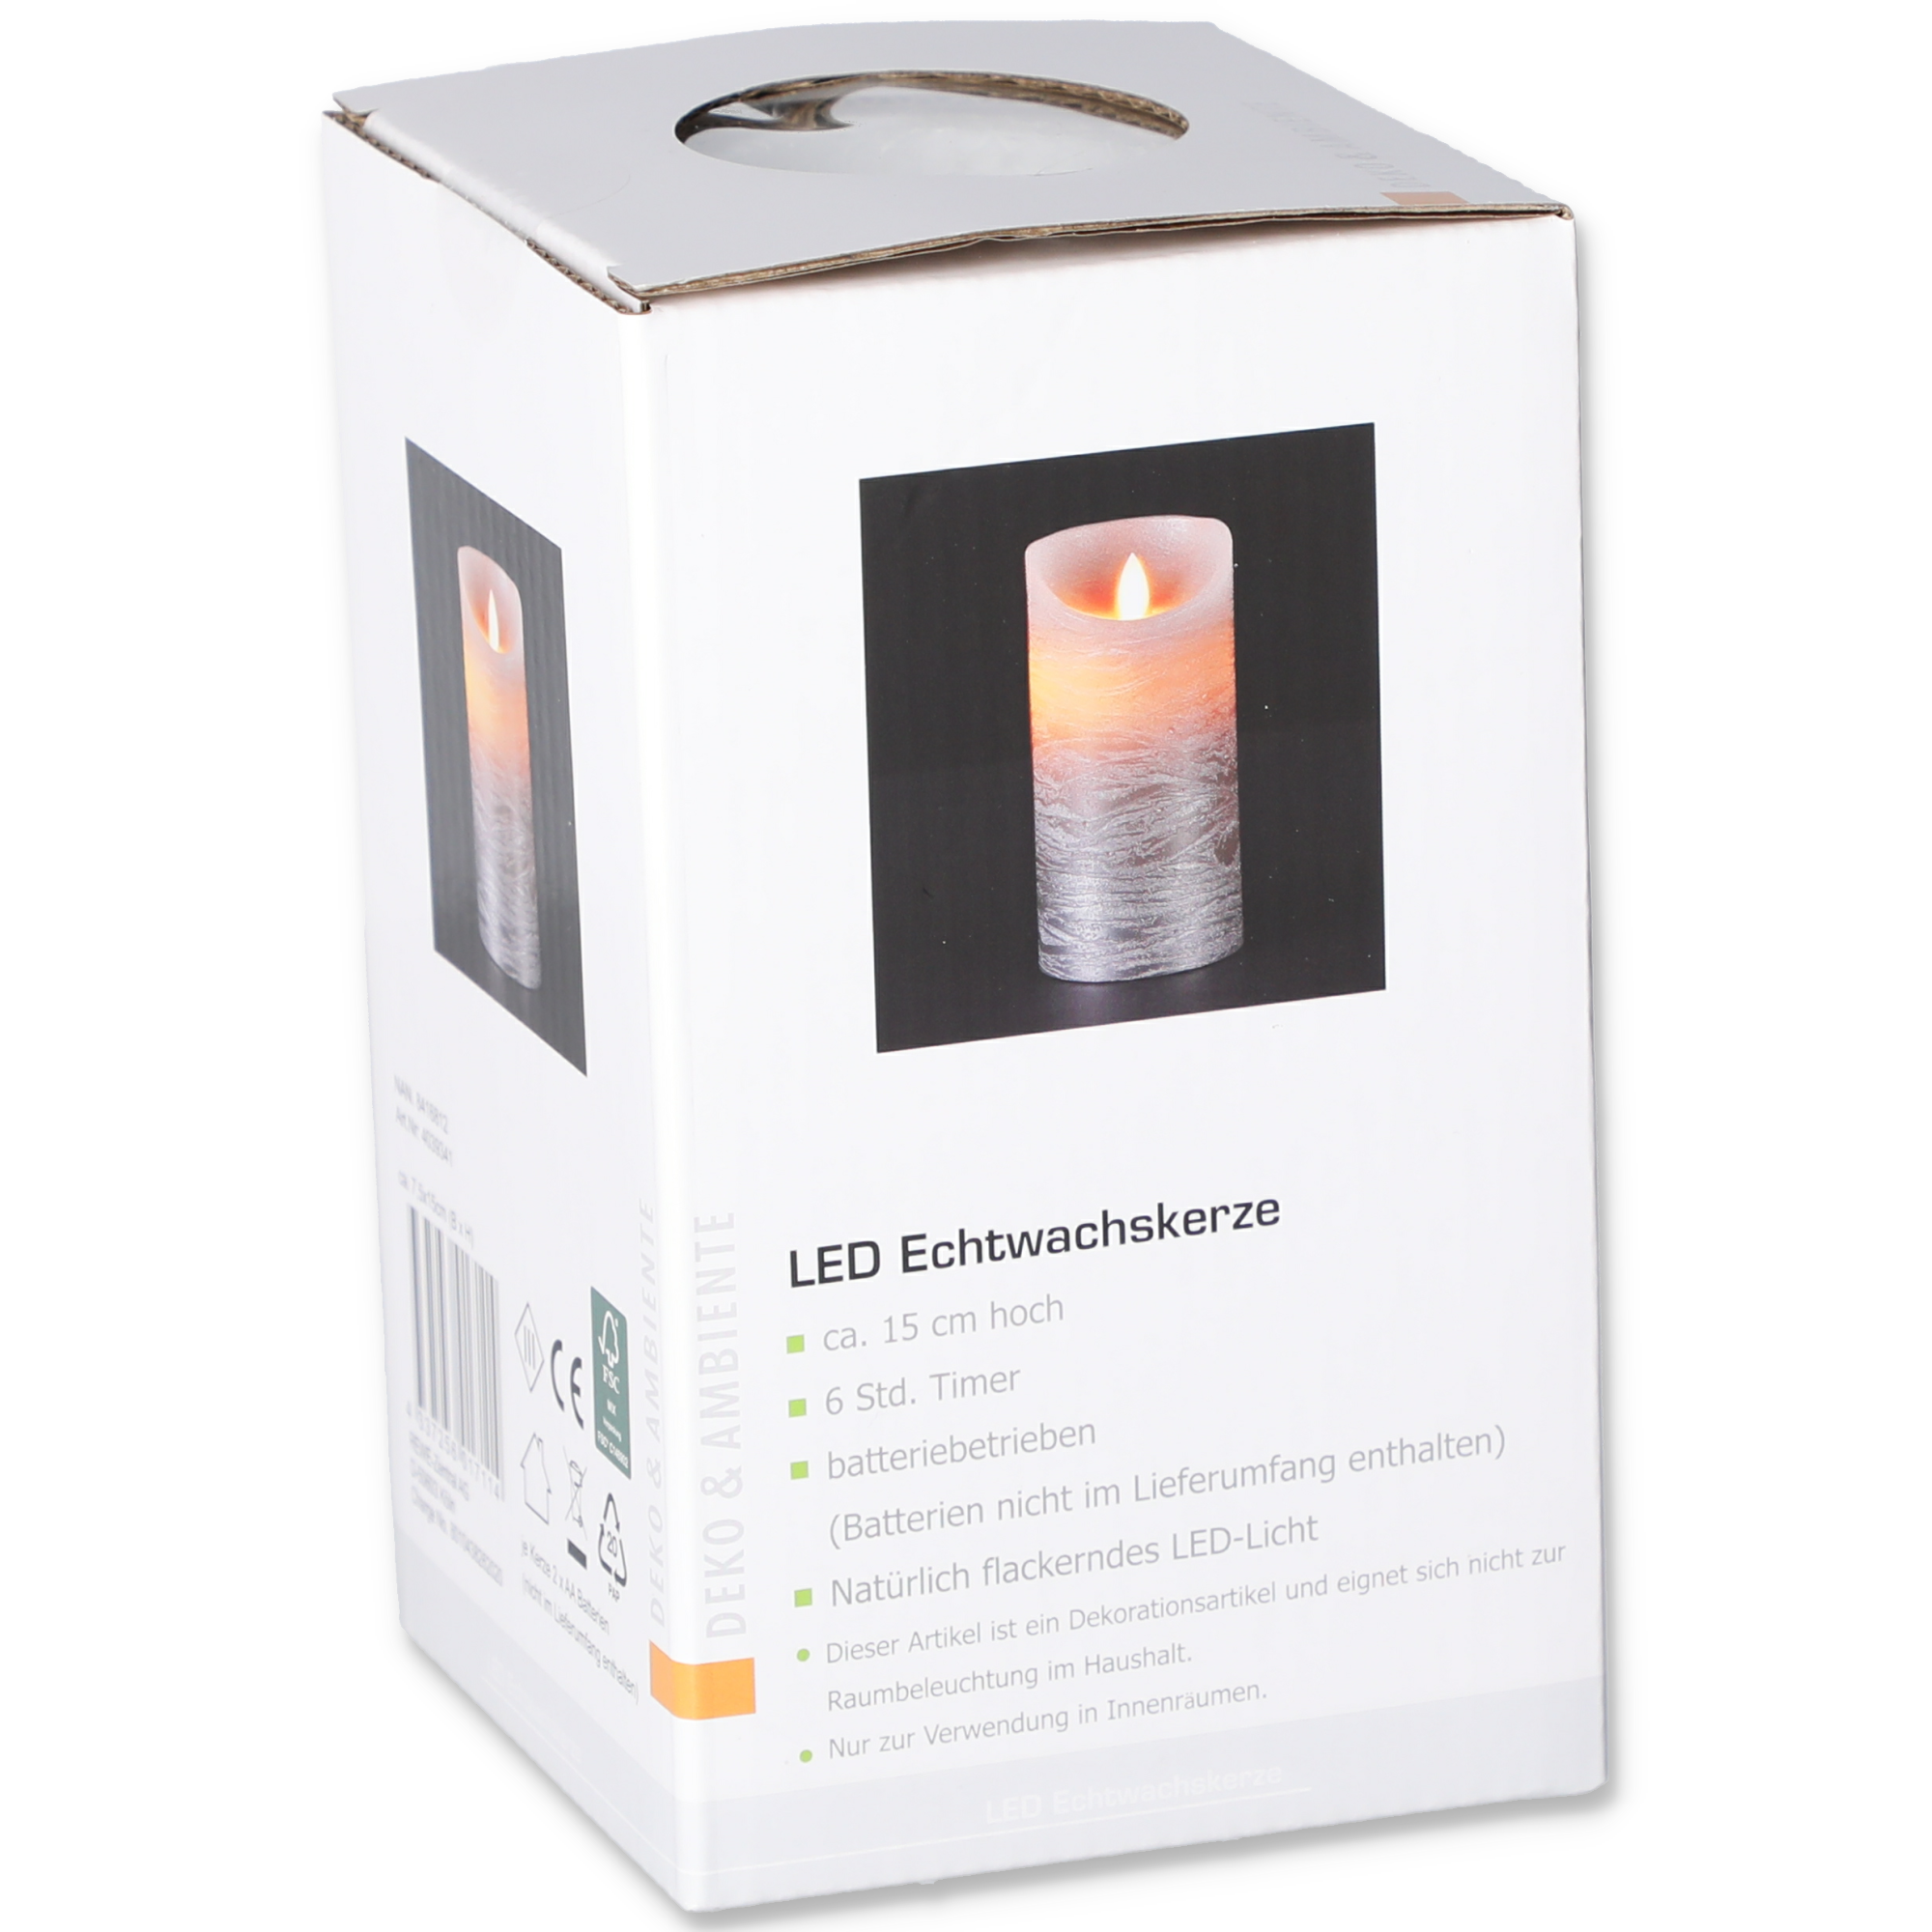 LED-Echtwachskerze grau/silbern Ø 7 x 15 cm + product picture